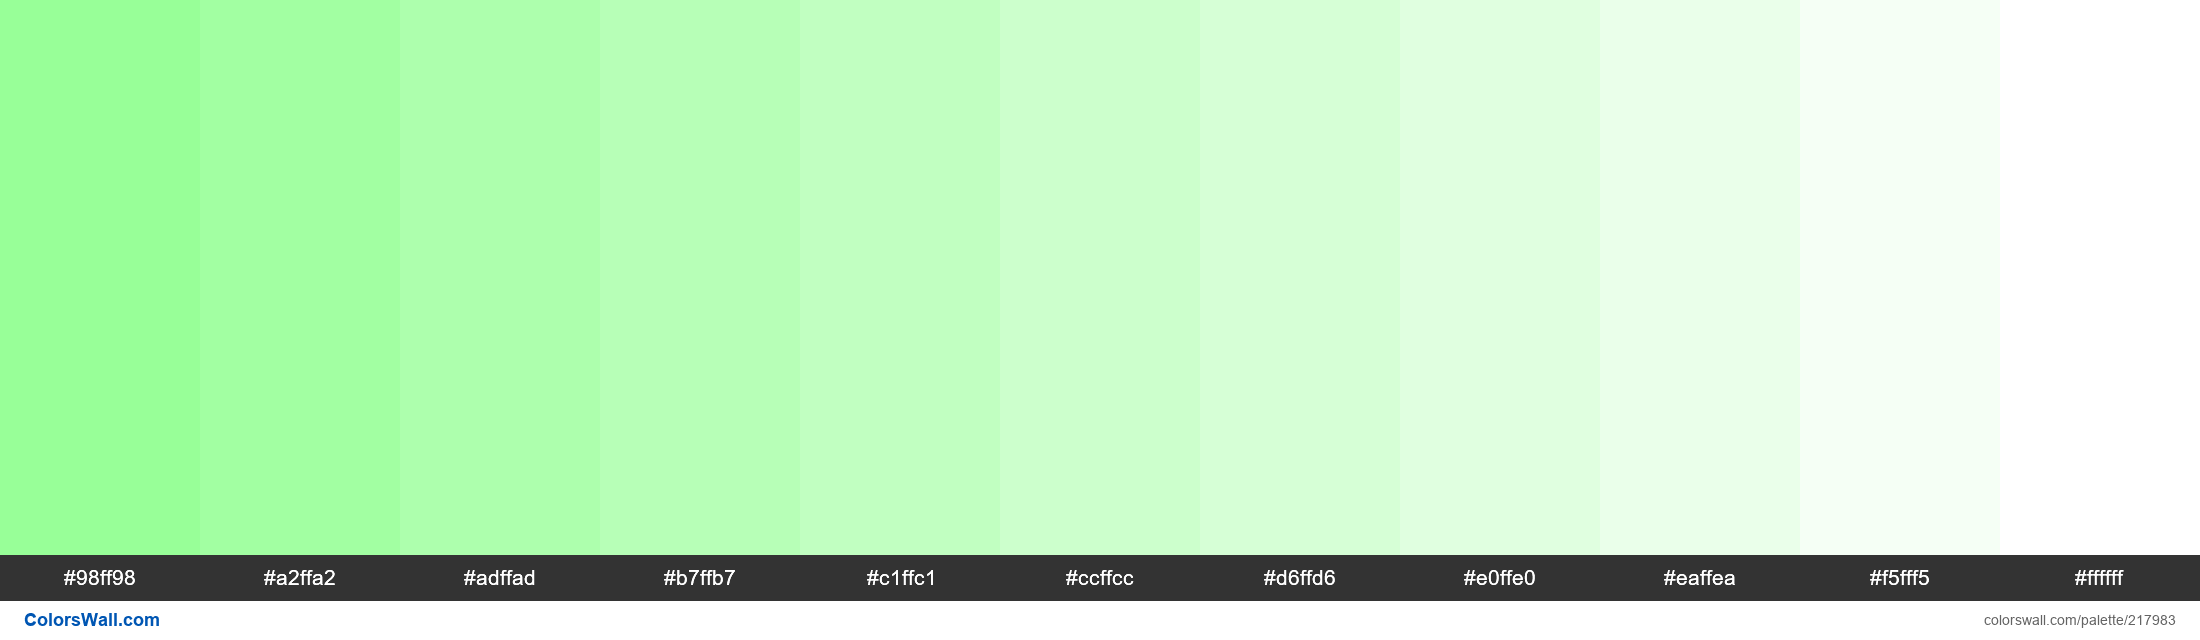 Shades XKCD Color khaki green #728639 hex colors palette - ColorsWall